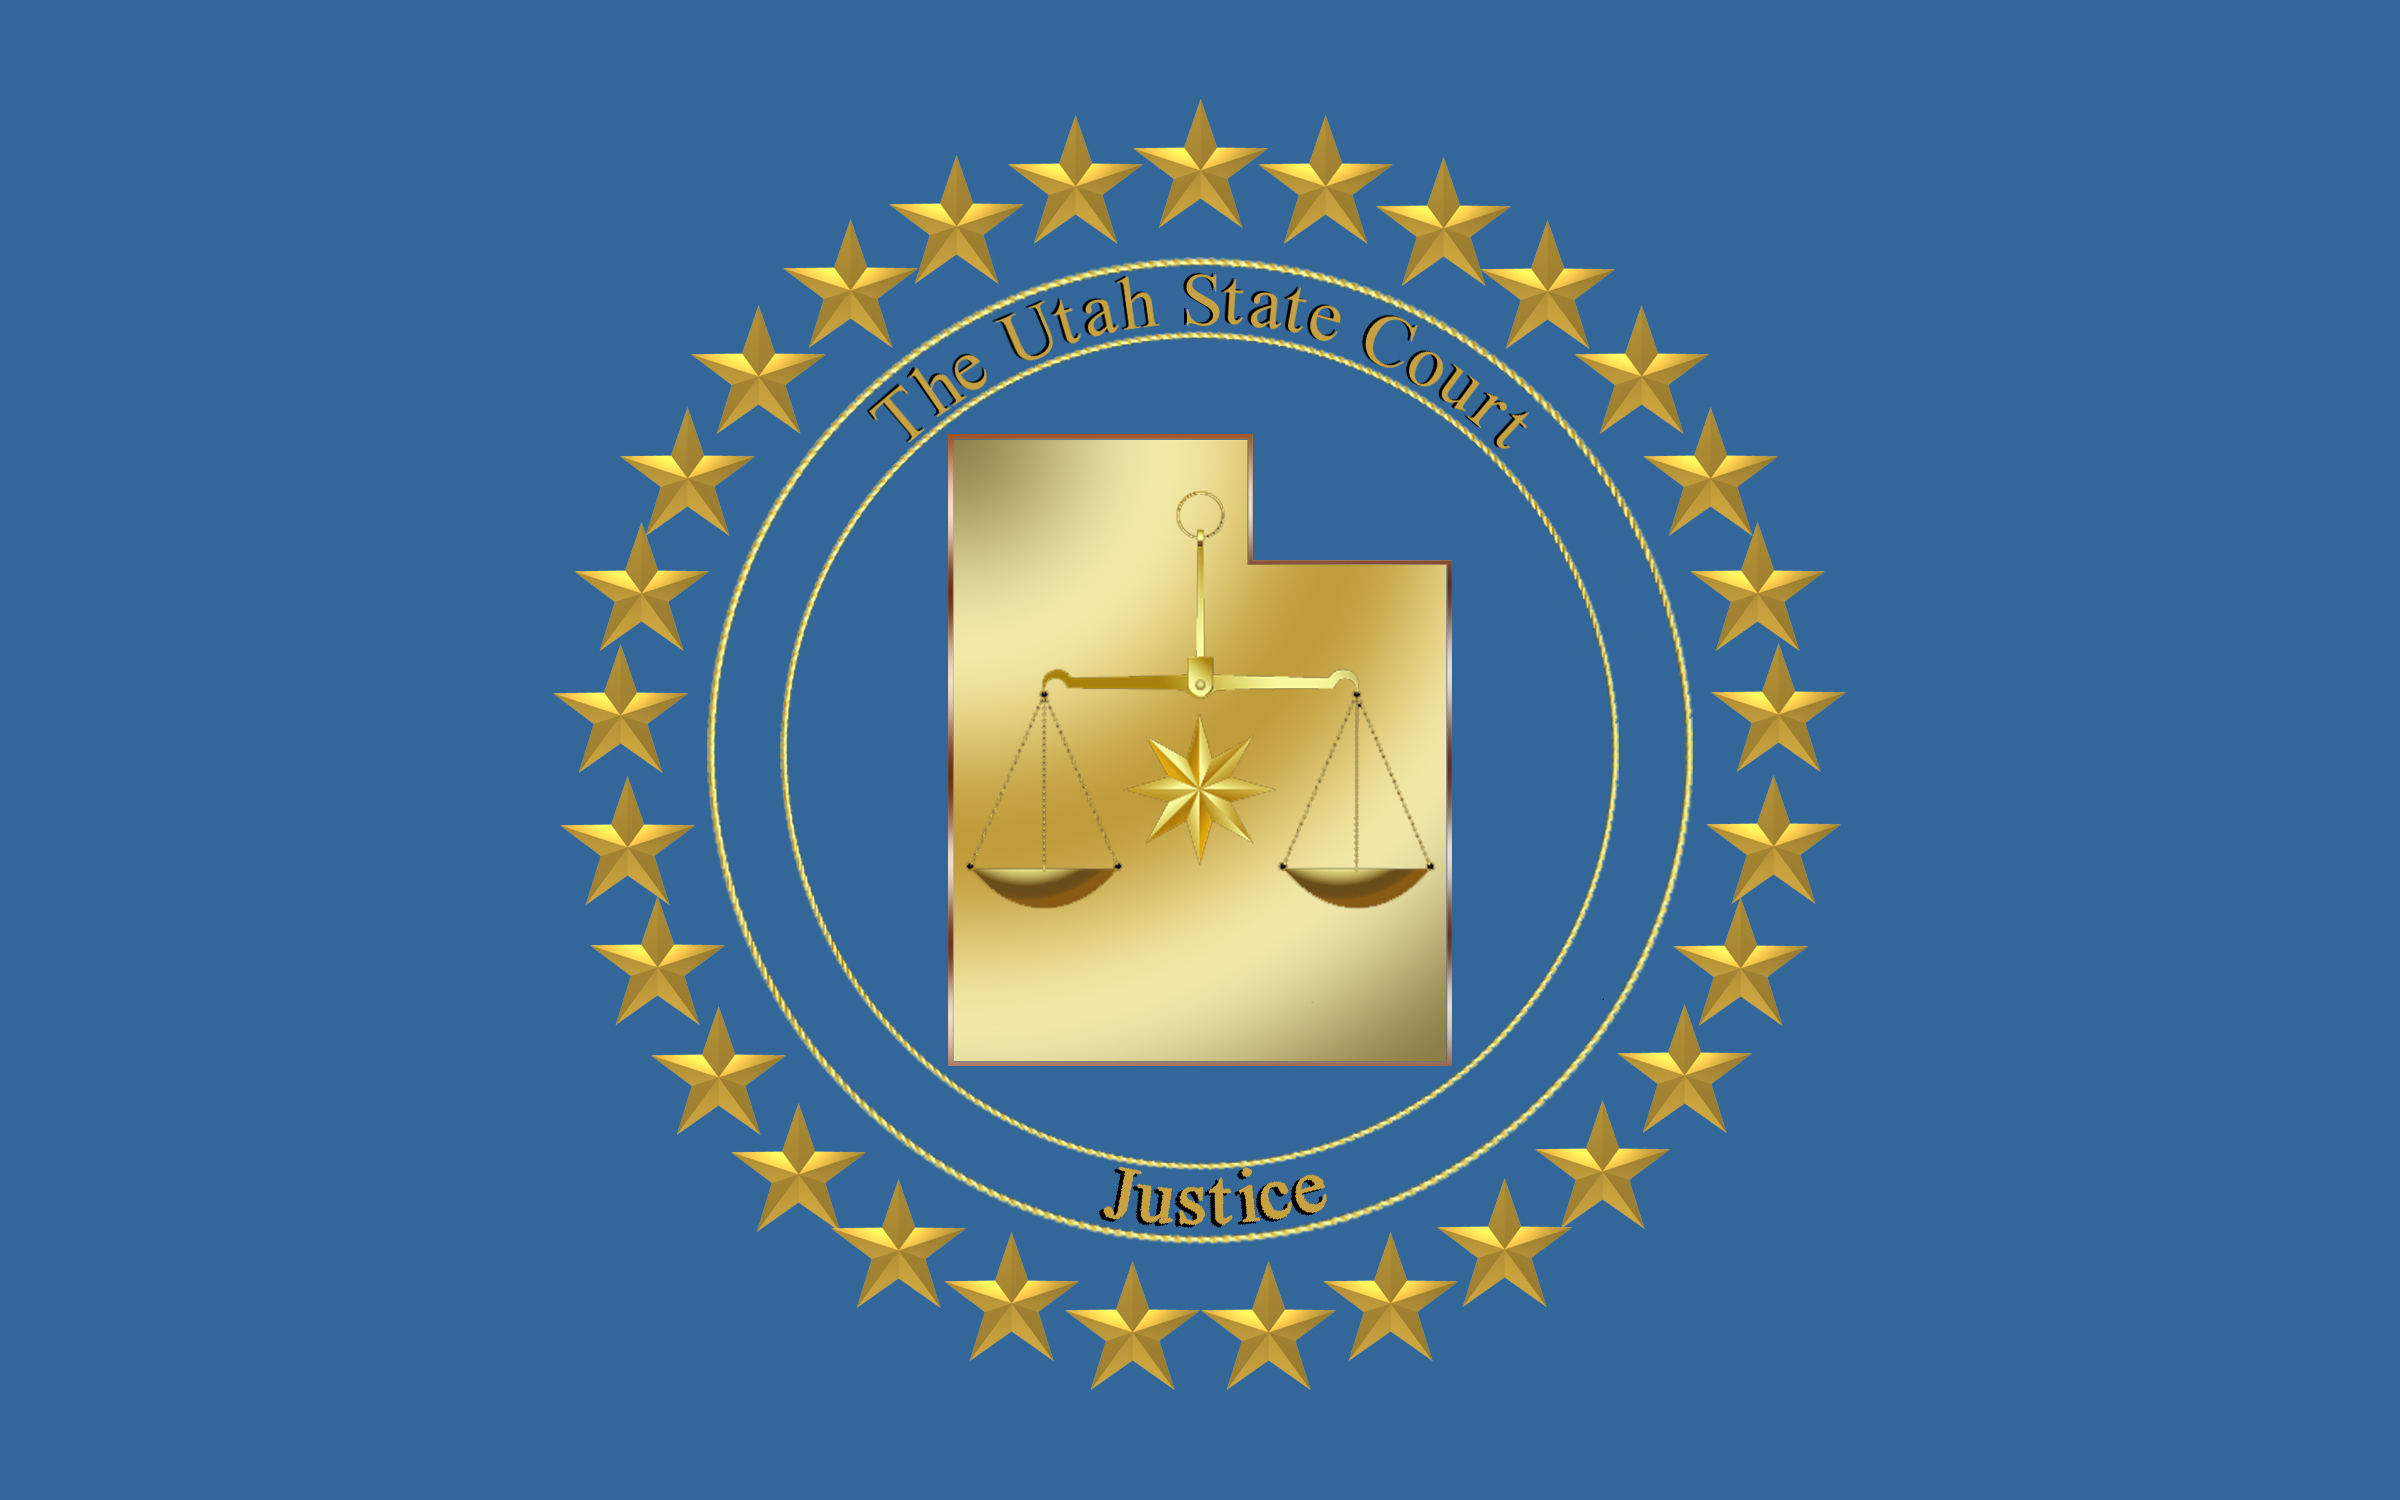 The Utah State Court Shield 29 Stars.jpg (3434 bytes)